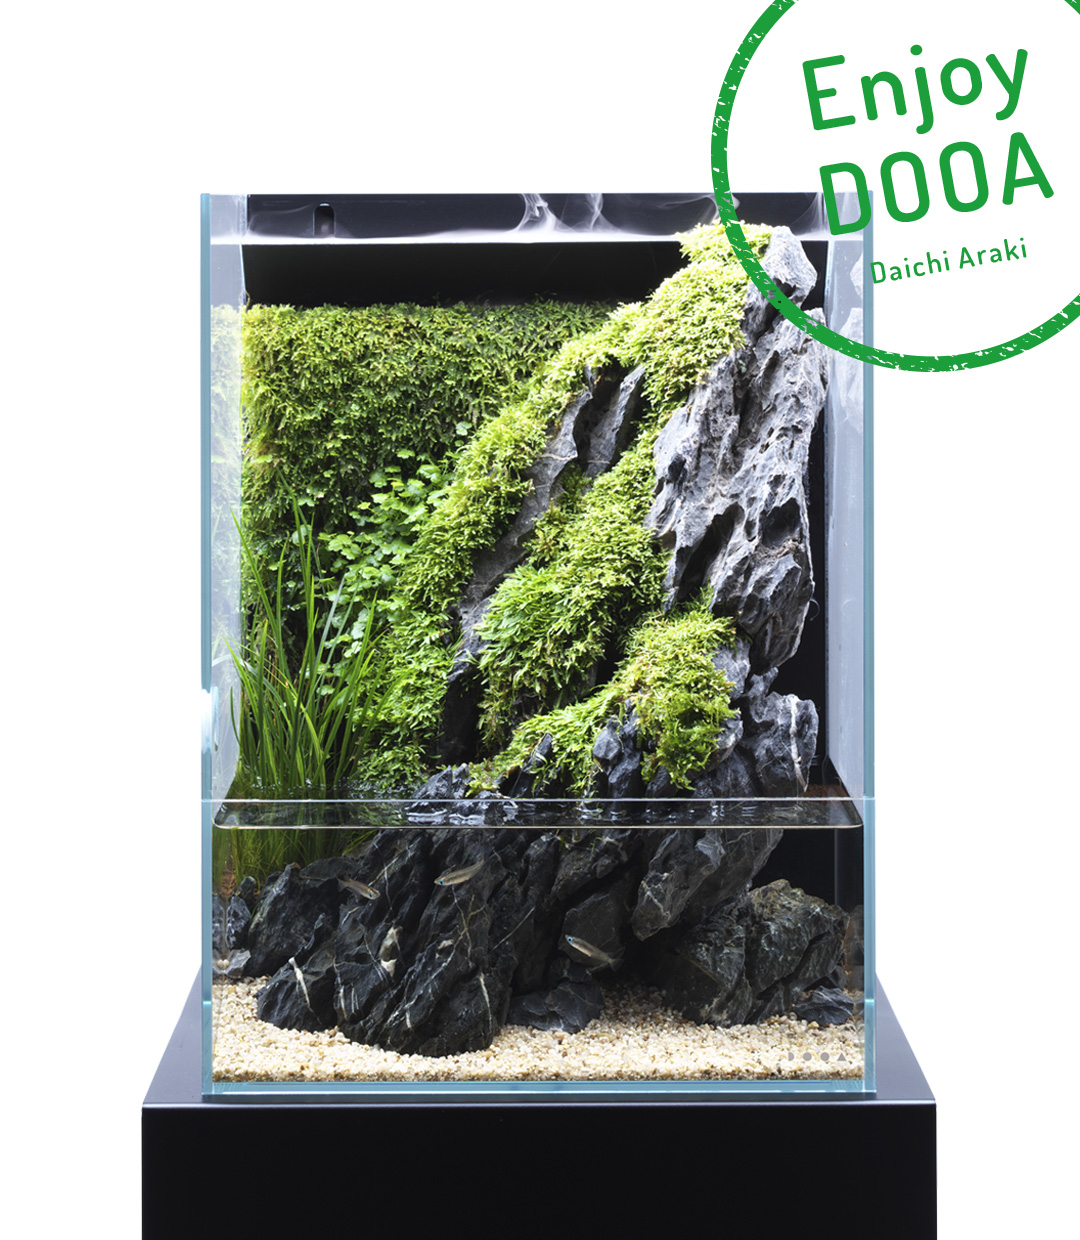 Enjoy DOOA ‘Aqua Terrarium feeling cool from the combination of greenery and stones’